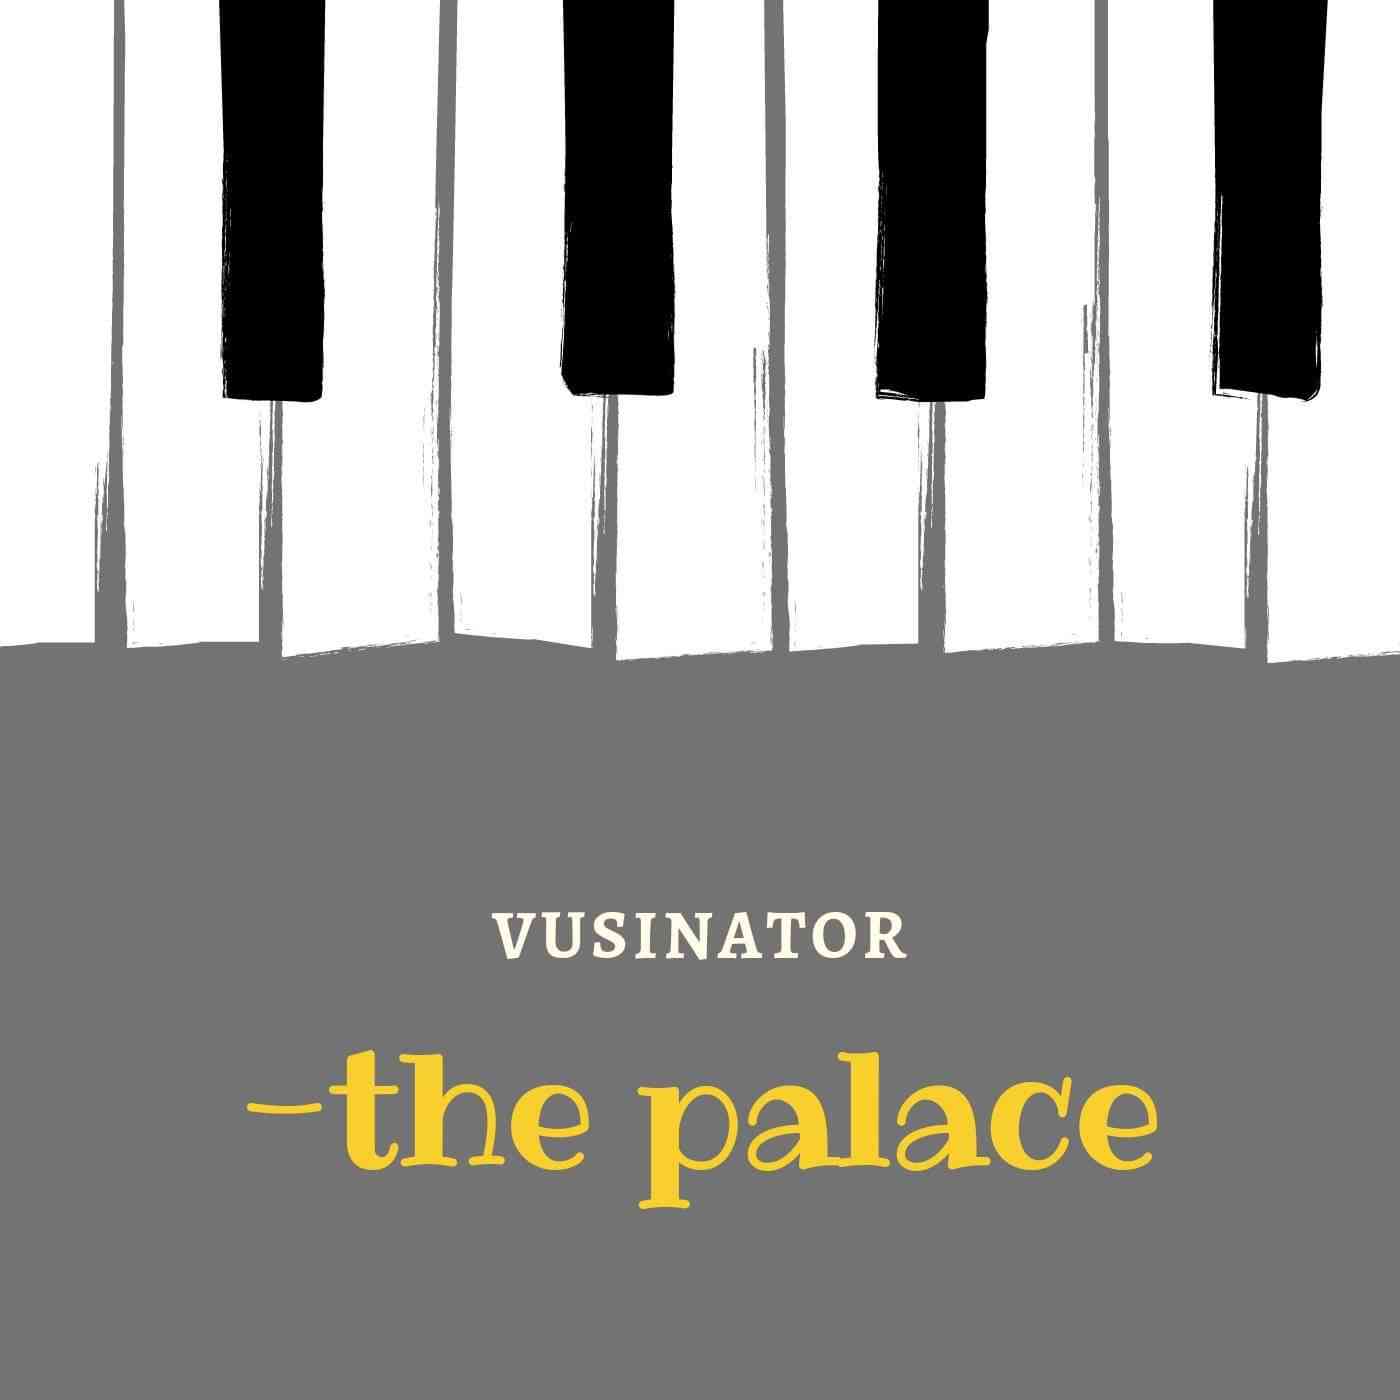 Vusinator The palace